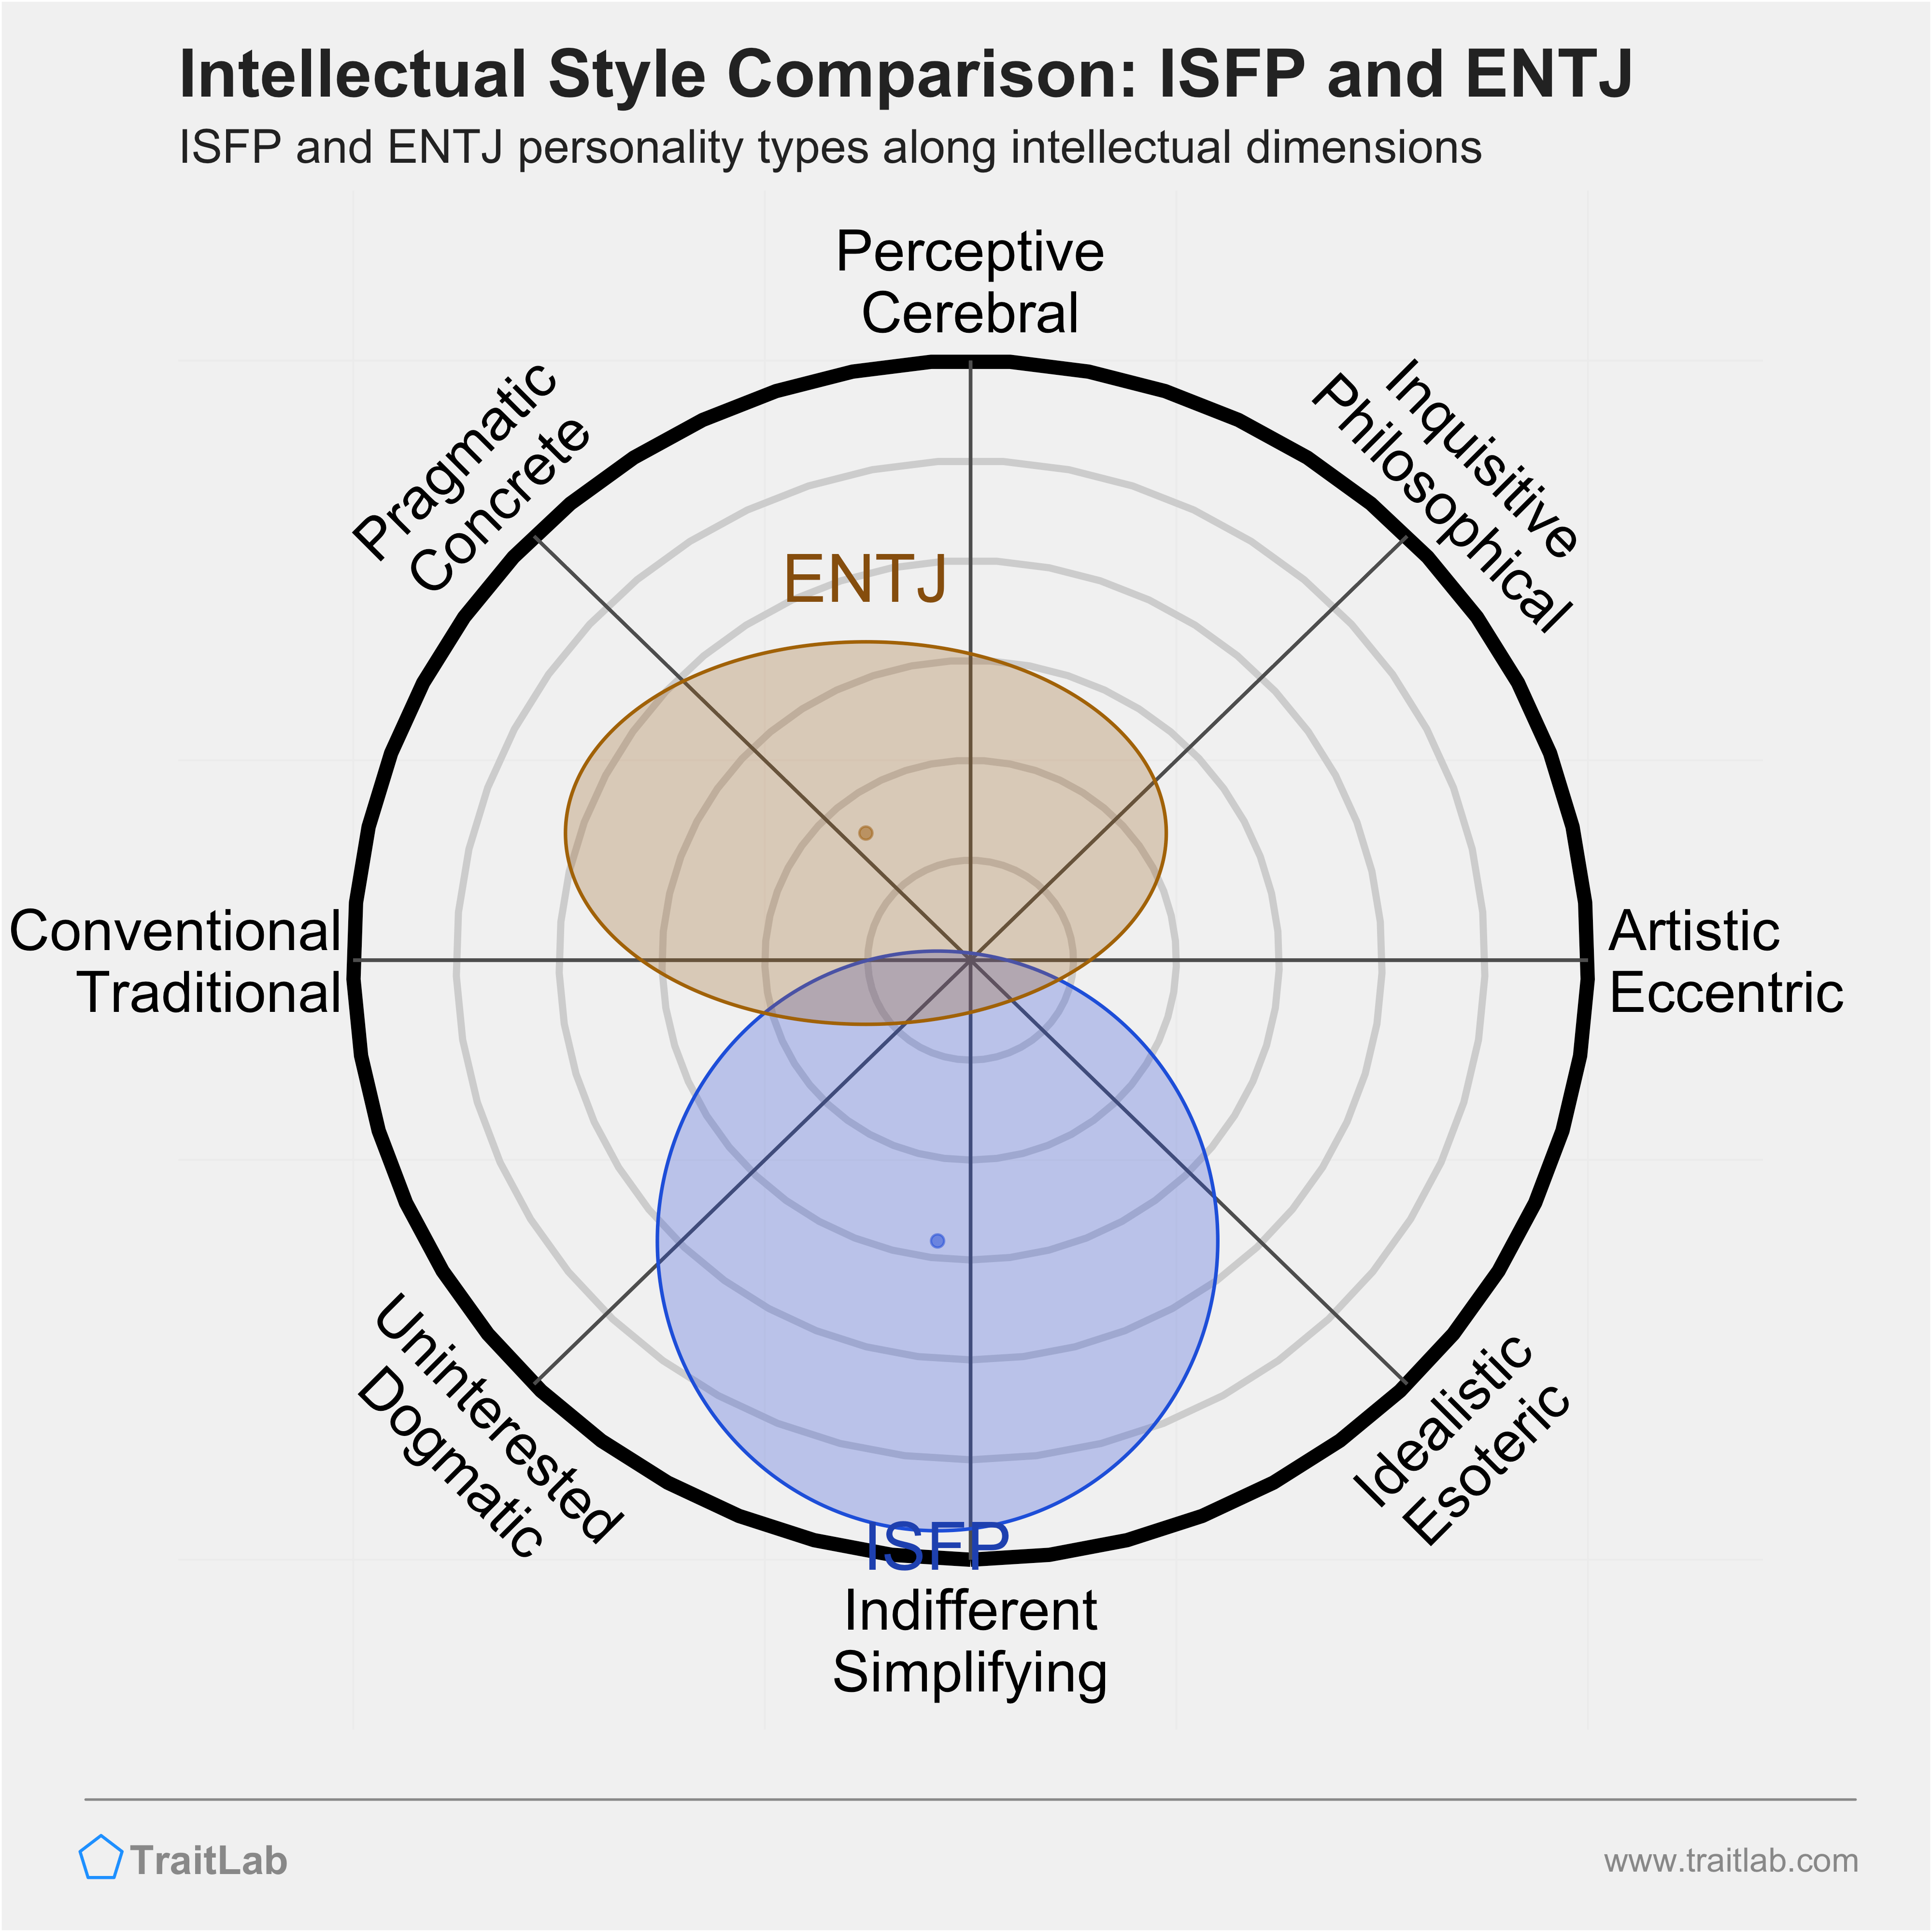 ISFP and ENTJ comparison across intellectual dimensions